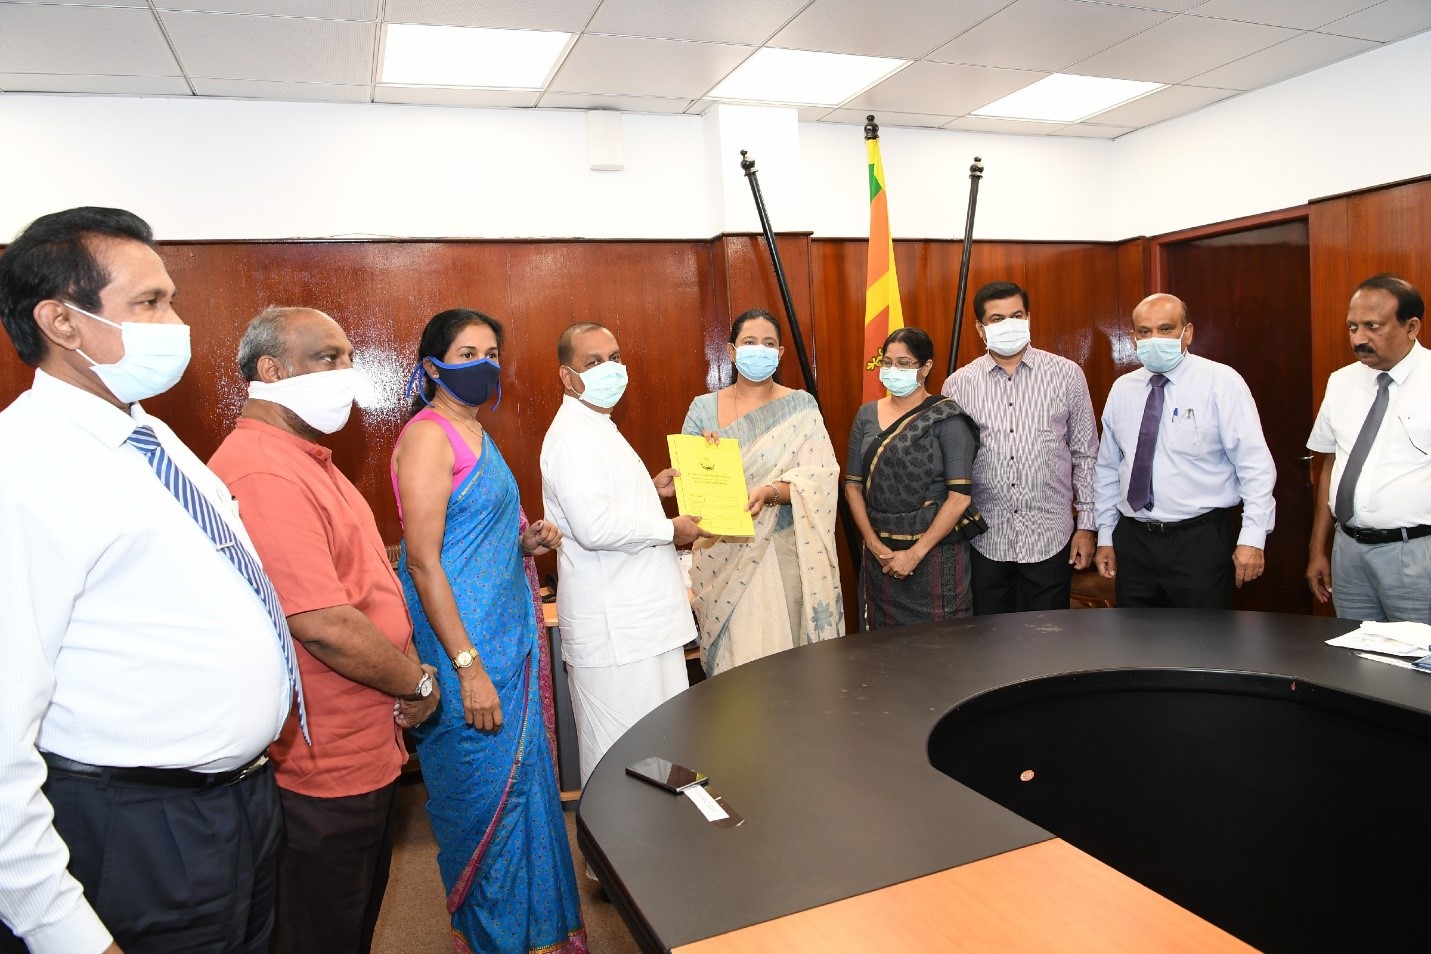 LKR 23 million worth IAEA’s donation, COVID-19 identification systems handed over to Sri Lanka Ministry of Health